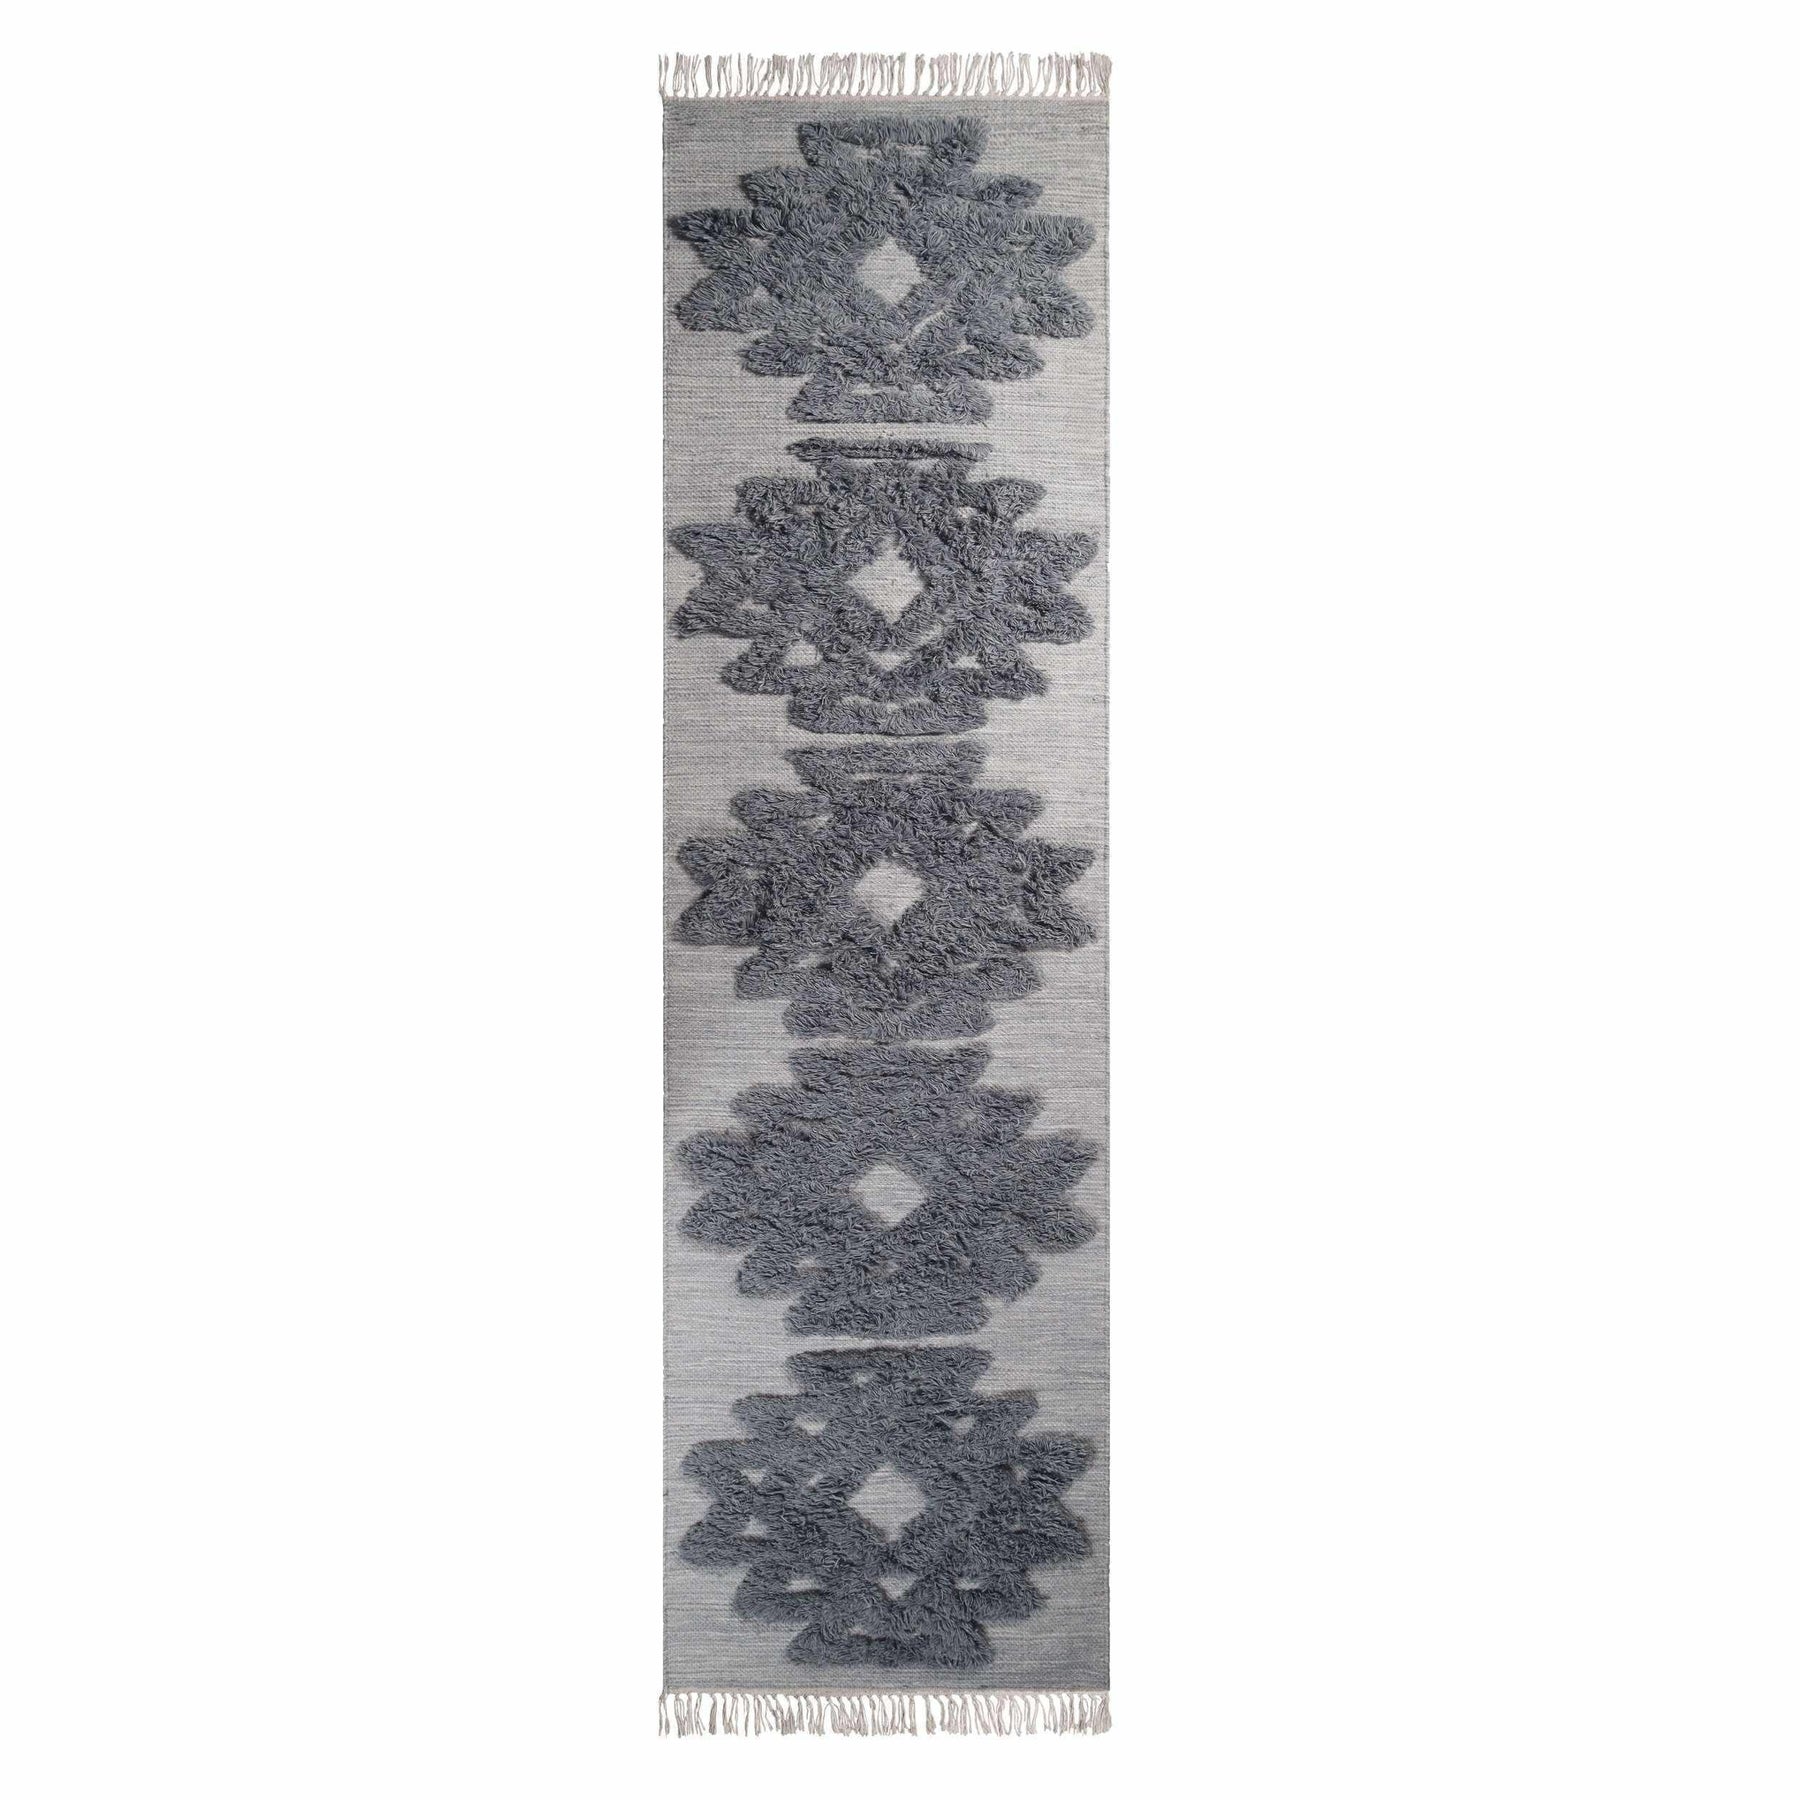  Superior Bohemian Wool Geometric Medallion Fringe Indoor Area or Runner Rug - Silver-Grey